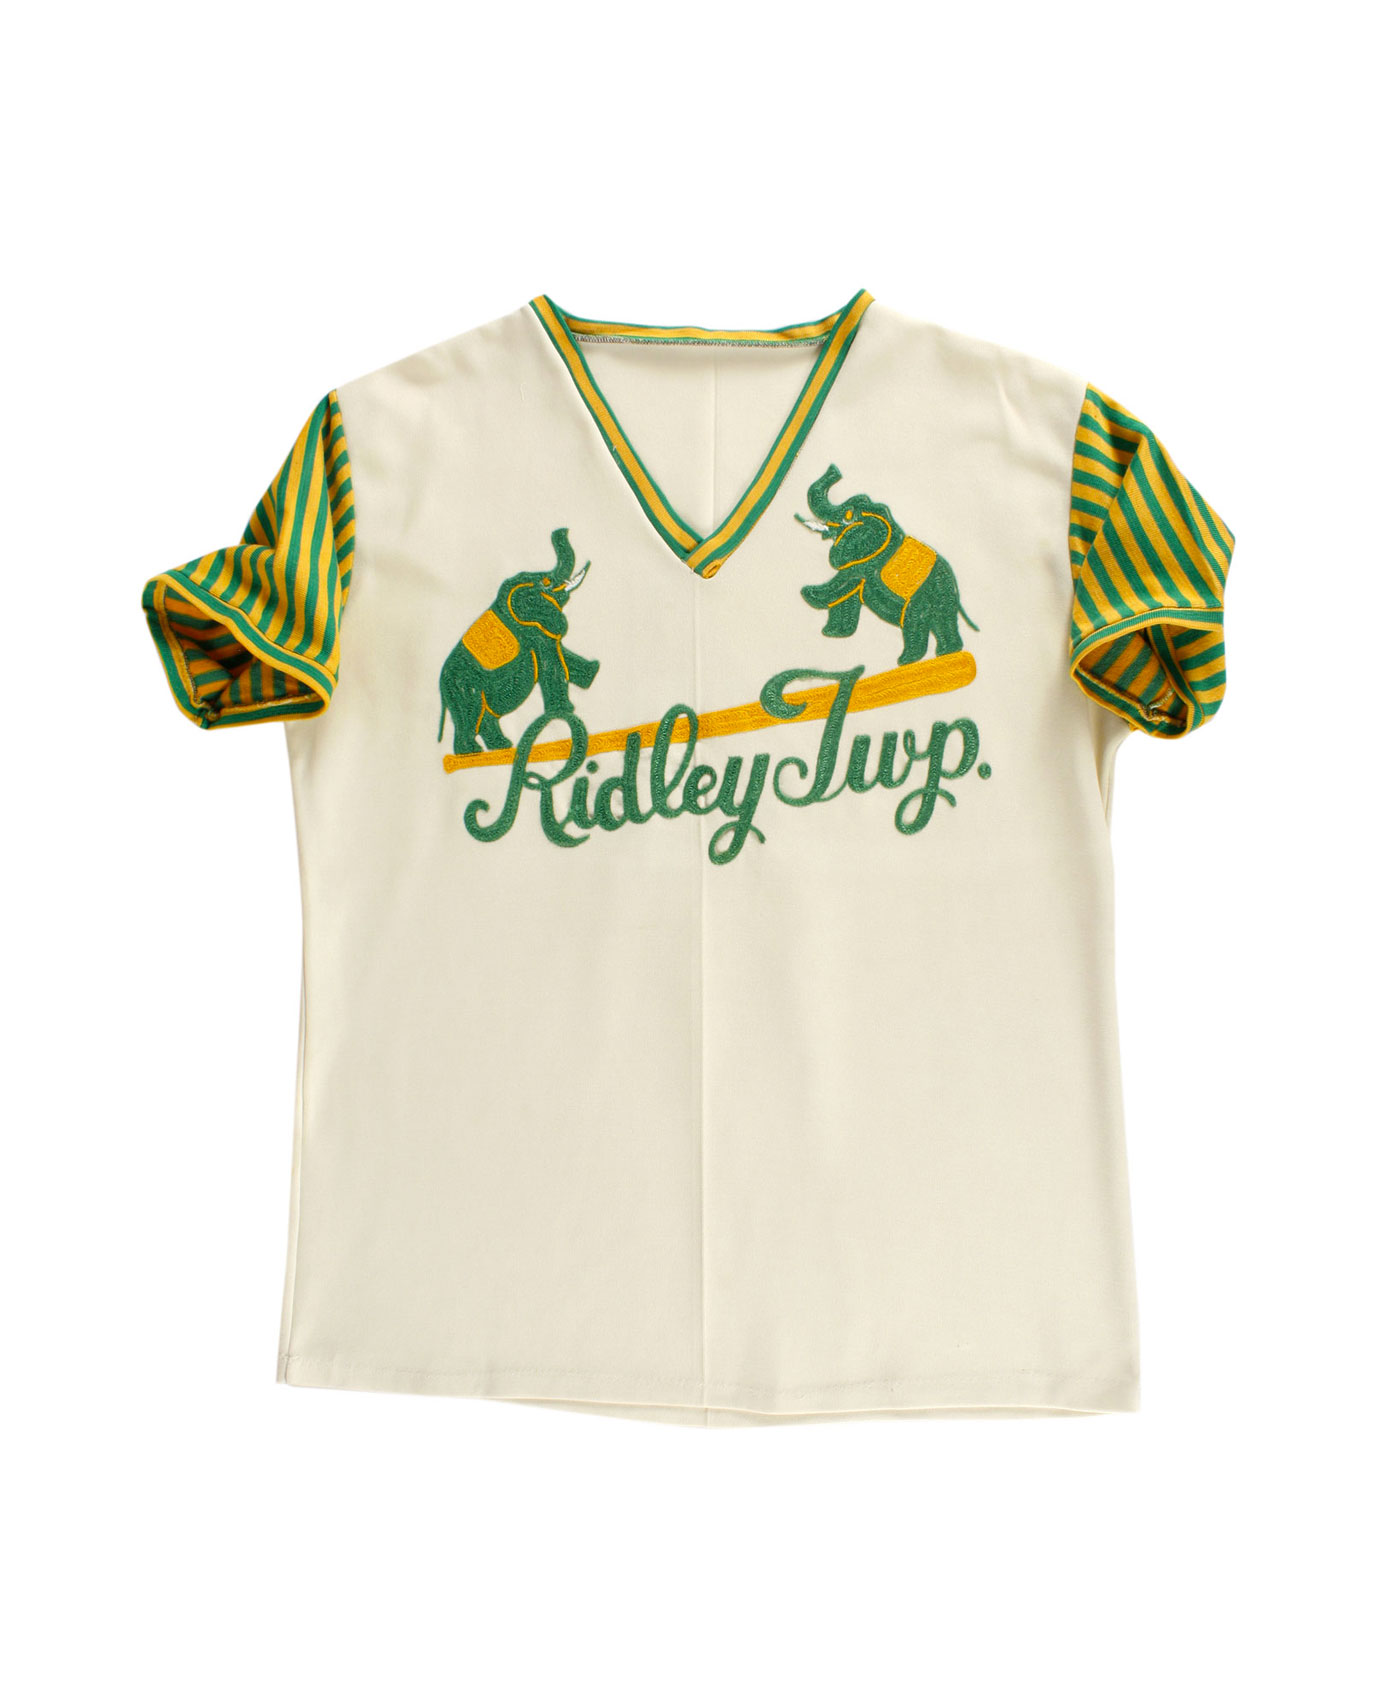 RIDLEY TWP Baseball t-shirt '60/70s